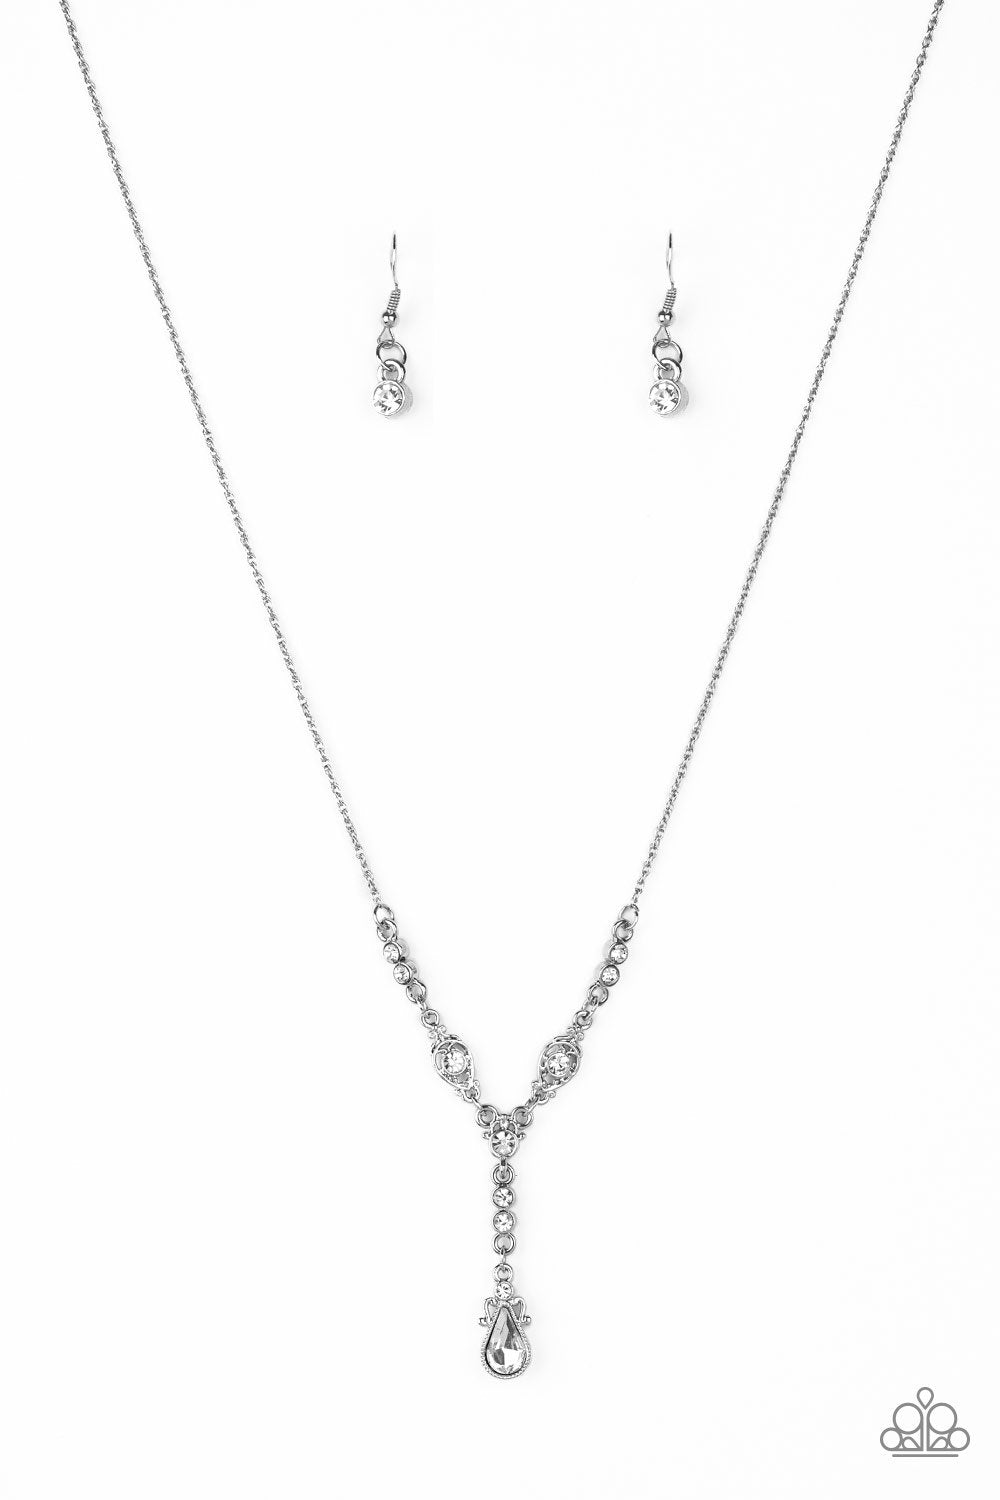 Diva Dazzle White Rhinestone Necklace - Paparazzi Accessories - lightbox -CarasShop.com - $5 Jewelry by Cara Jewels